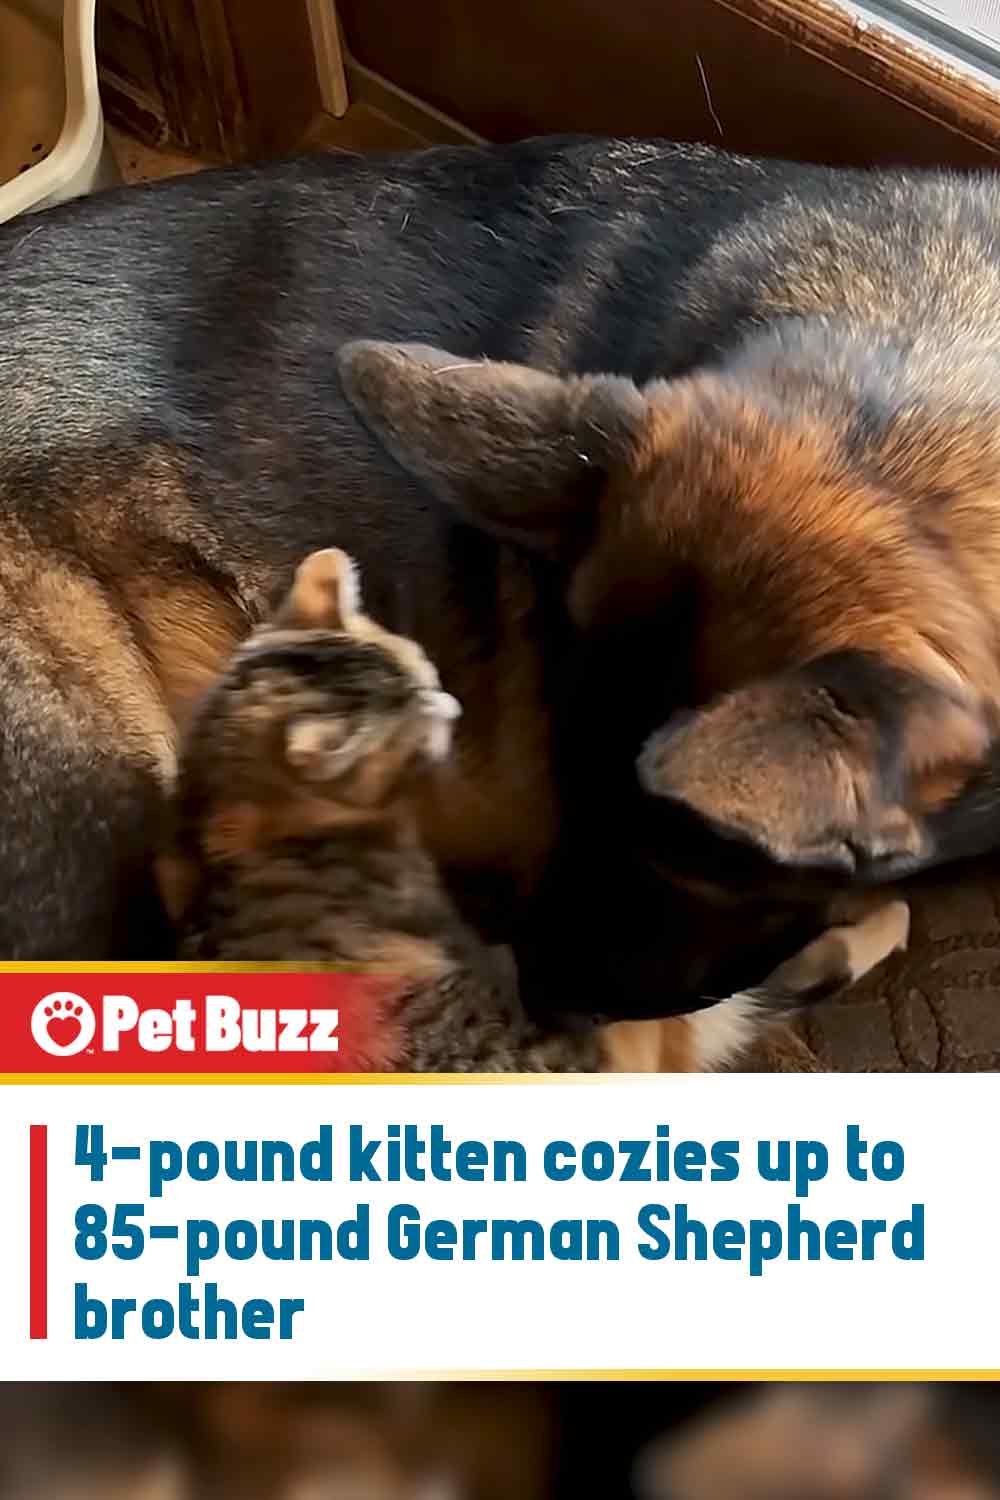 4-pound kitten cozies up to 85-pound German Shepherd brother